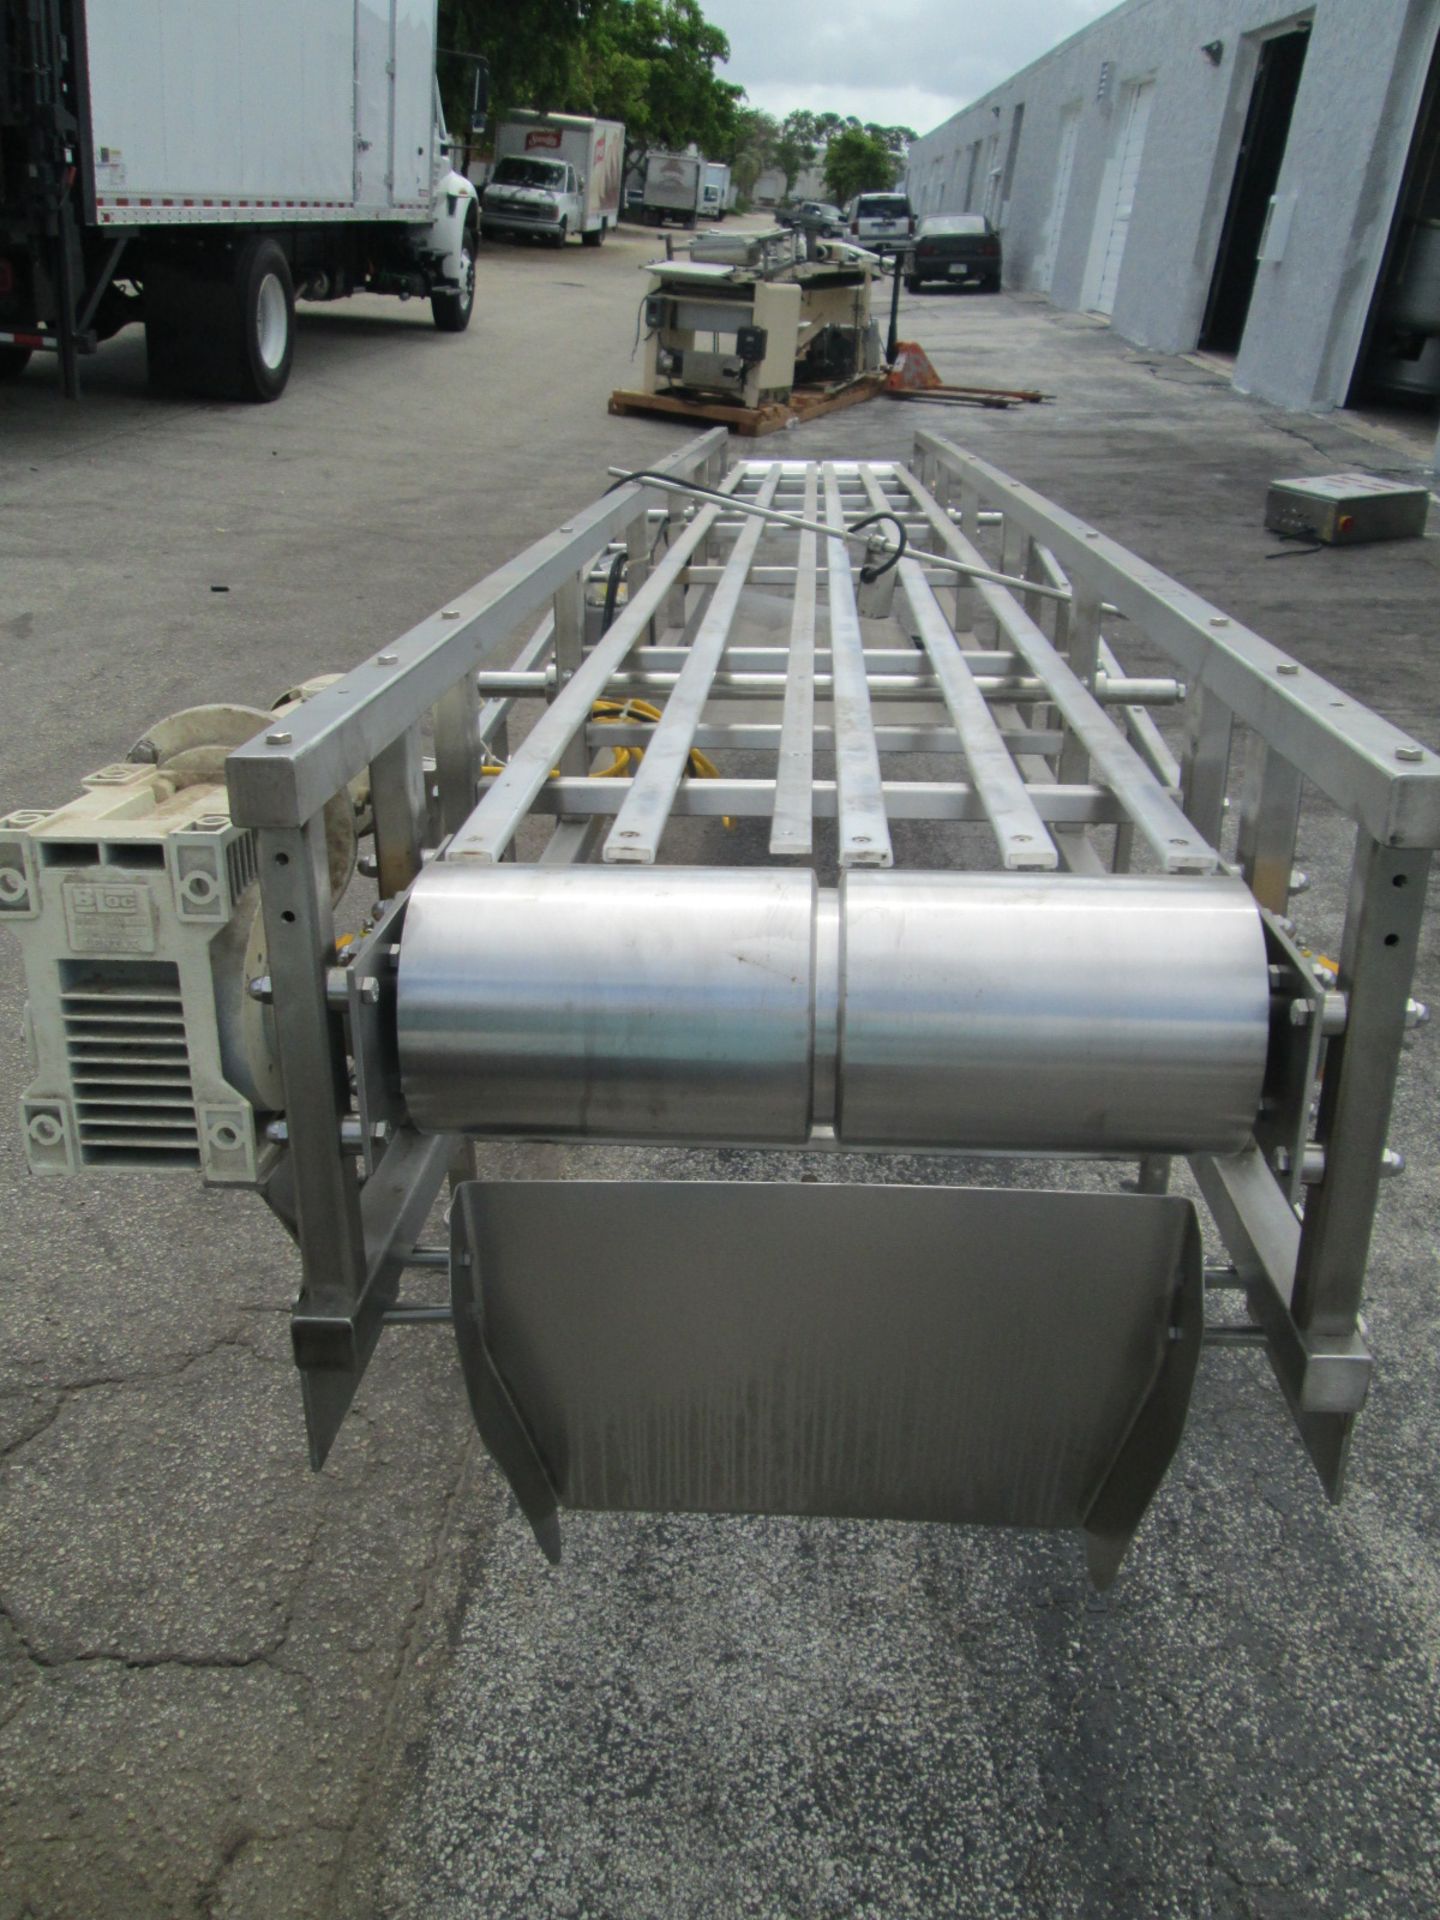 Weightpack Stainless Steel Rollwaway Conveyor Section, 14' long x 19" wide. - Image 10 of 11